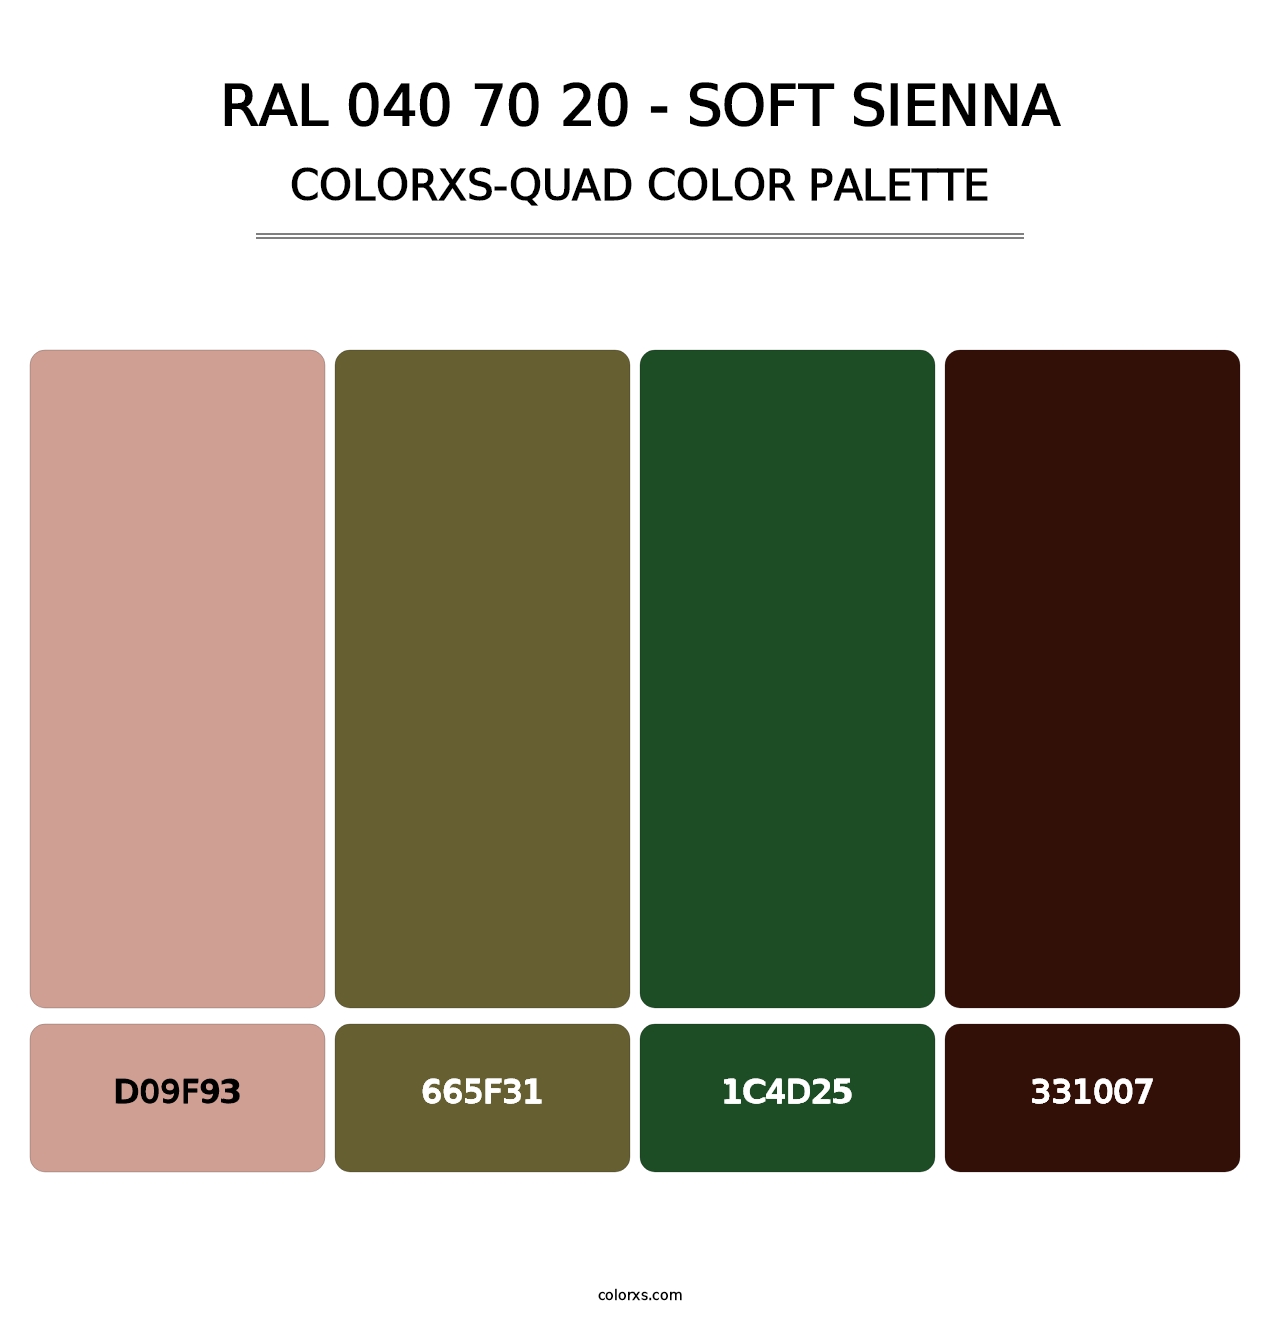 RAL 040 70 20 - Soft Sienna - Colorxs Quad Palette